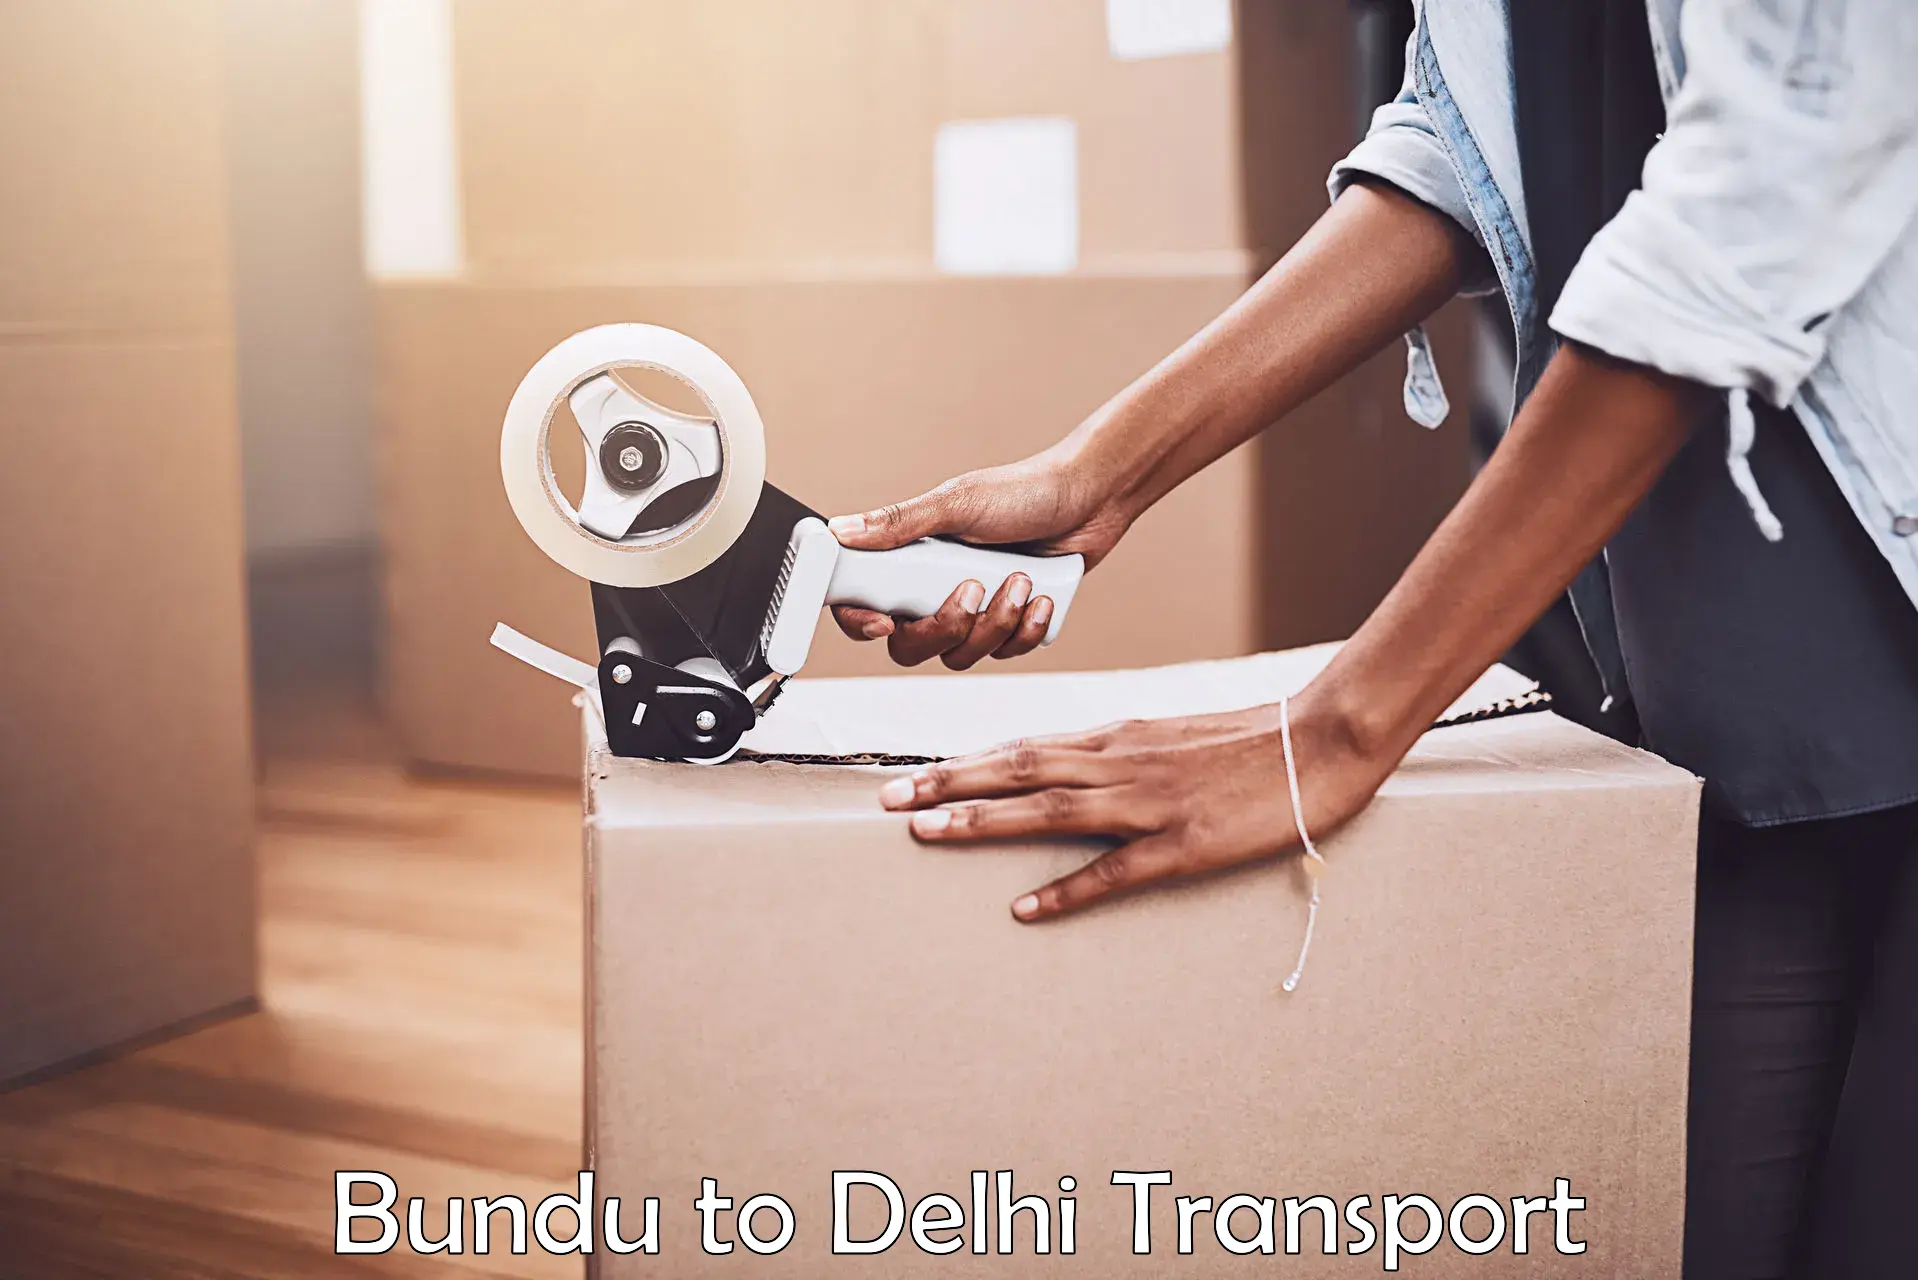 Bike transport service Bundu to East Delhi